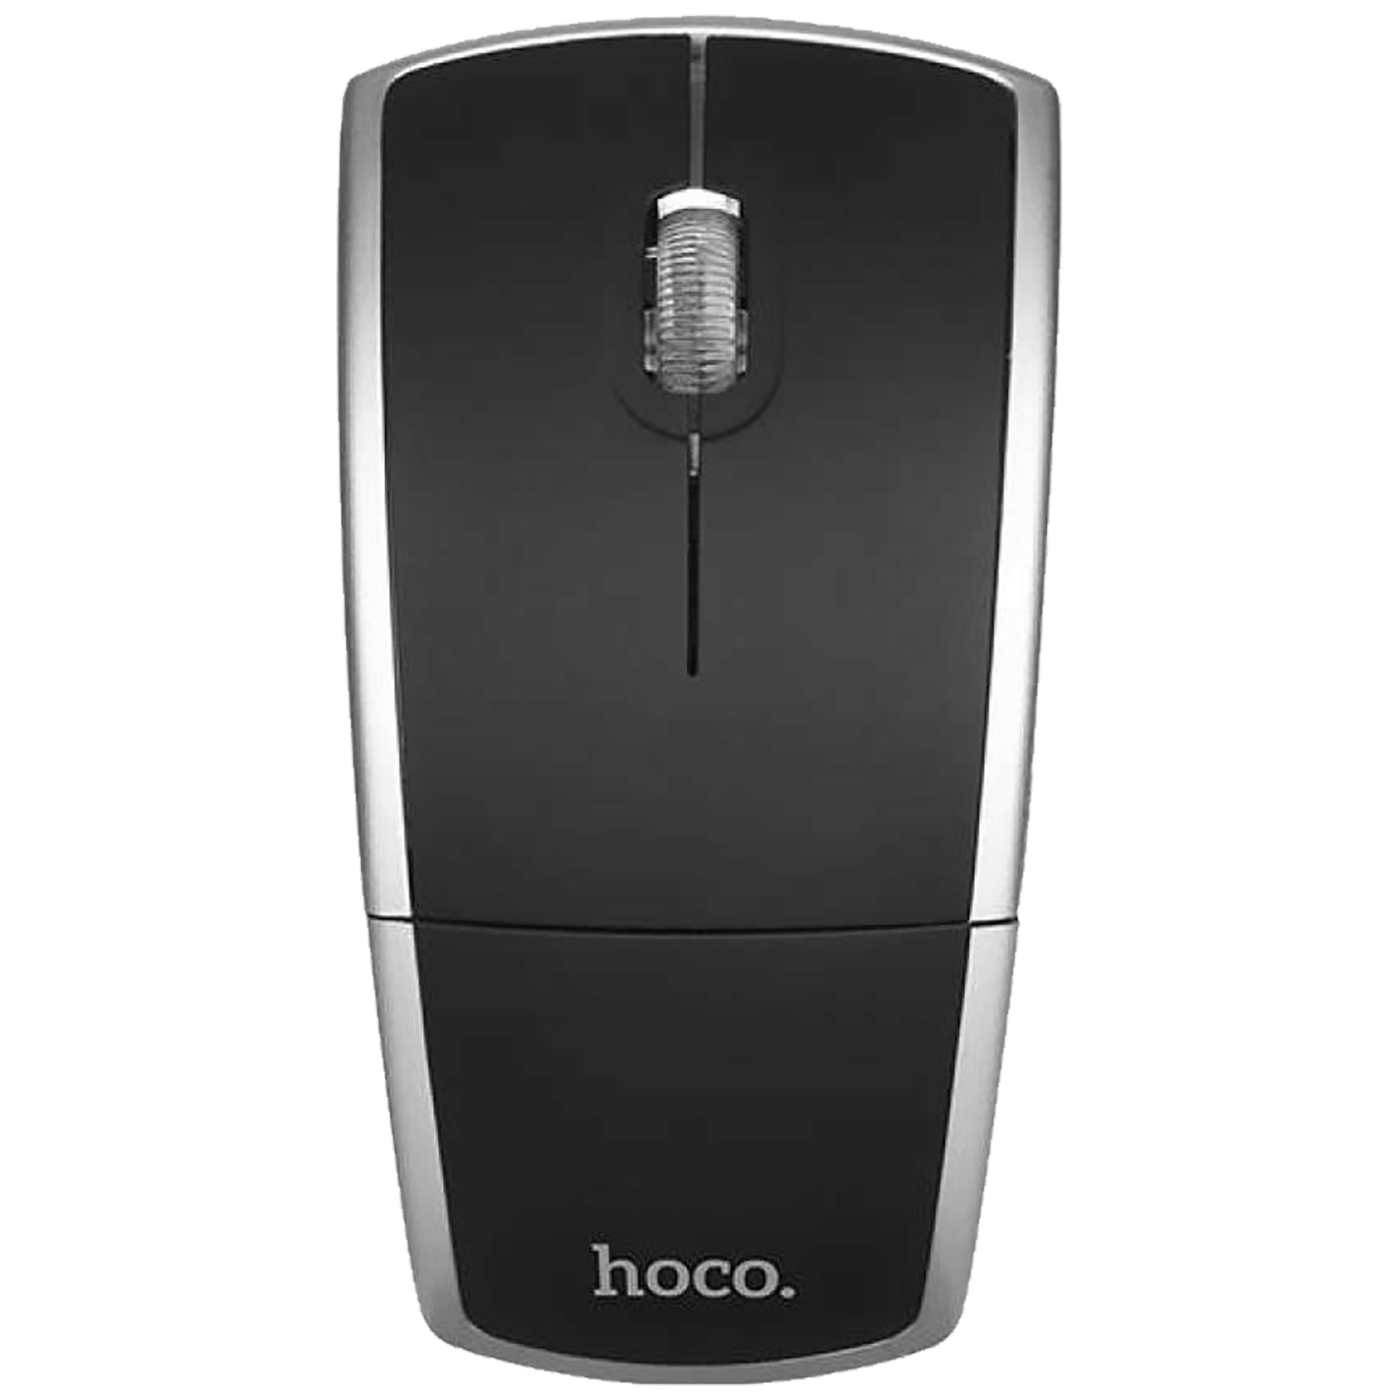 Hoco Wireless Foldable Mouse - DI03